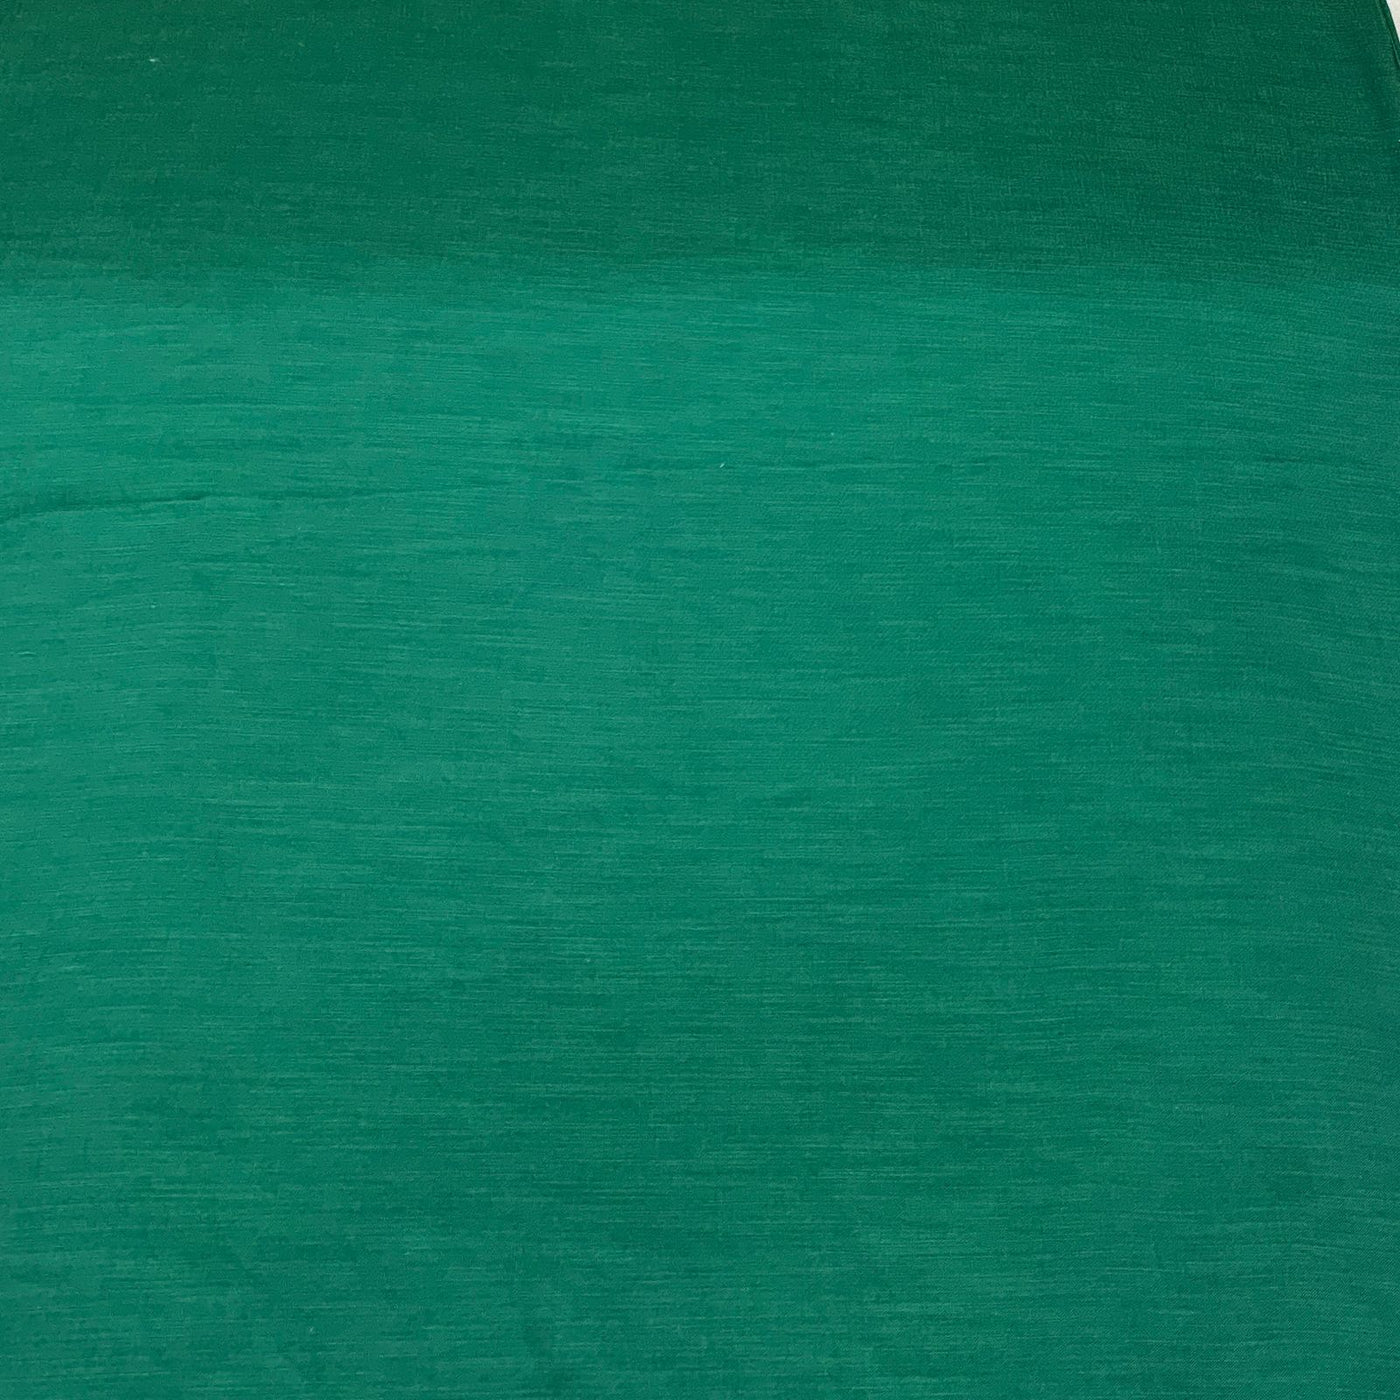 Bottle Green Plain Satin Linen Fabric